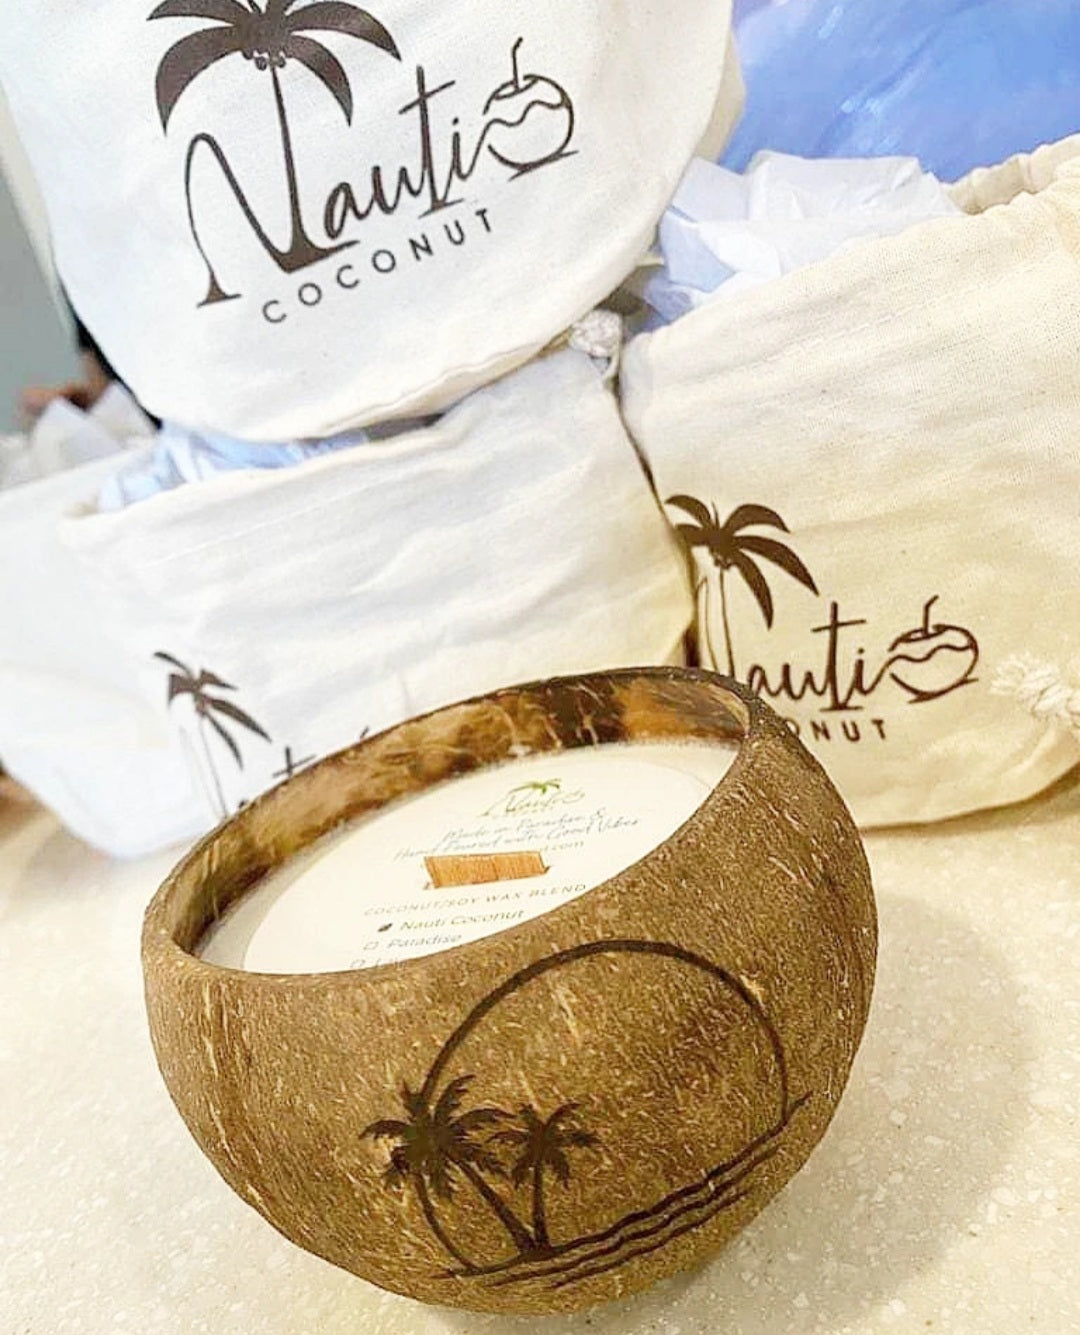 Nauti Coconut Candles